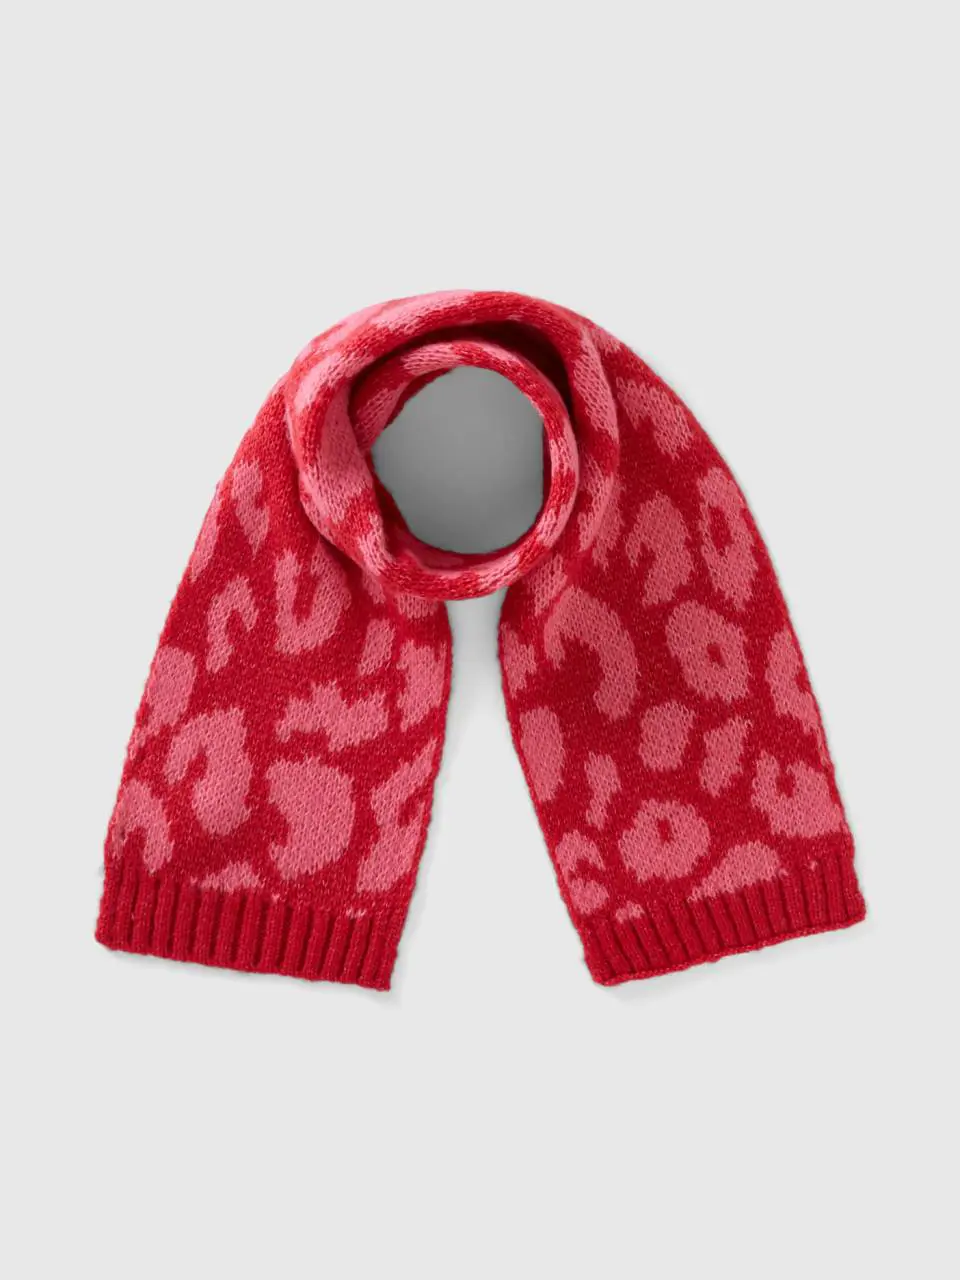 Benetton animal print scarf in wool blend. 1